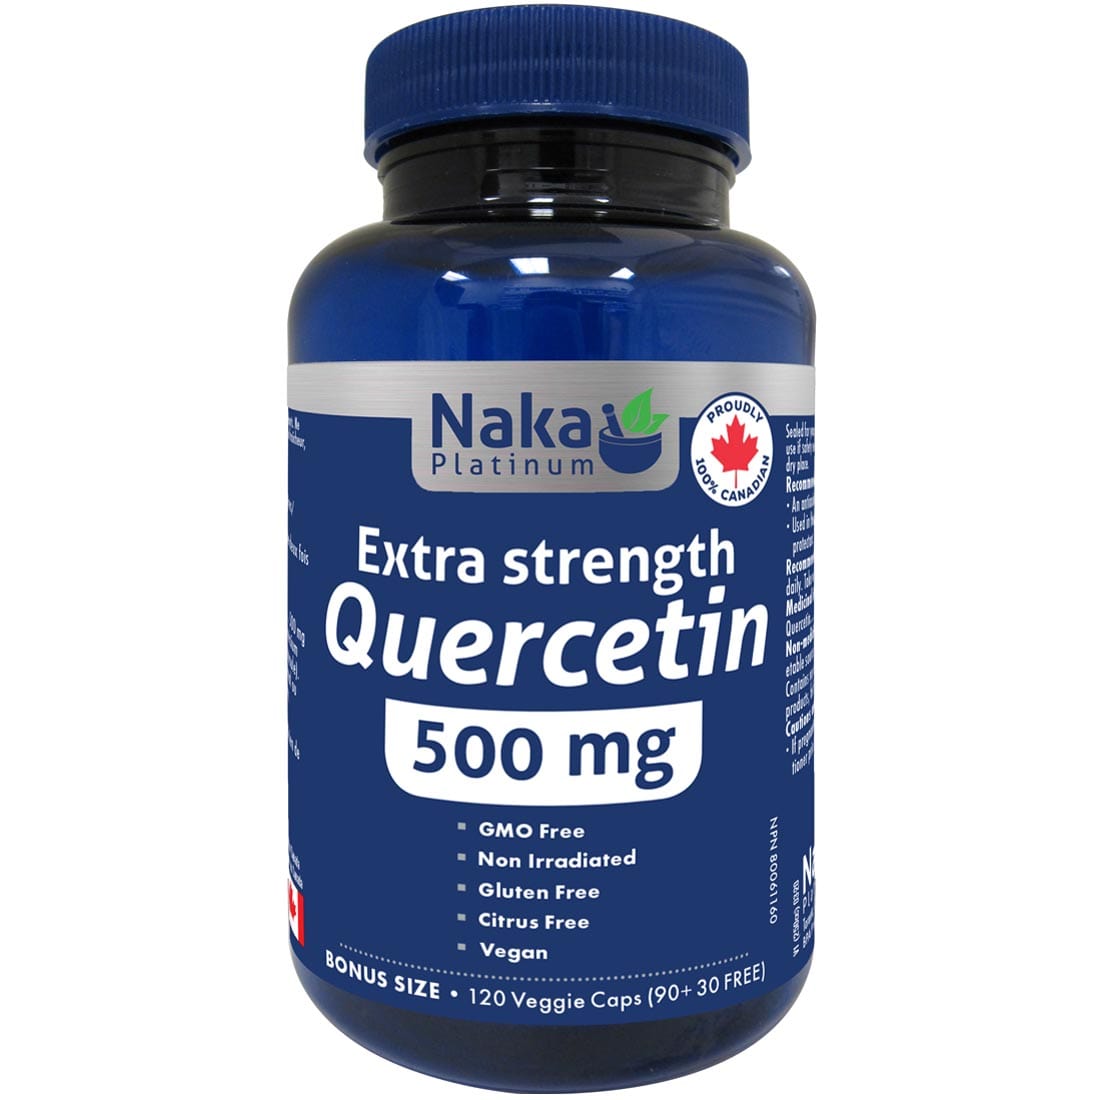 Naka Herbs Platinum Extra Strength Quercetin 500mg, 120 Vegetable Capsules (Bonus Size)